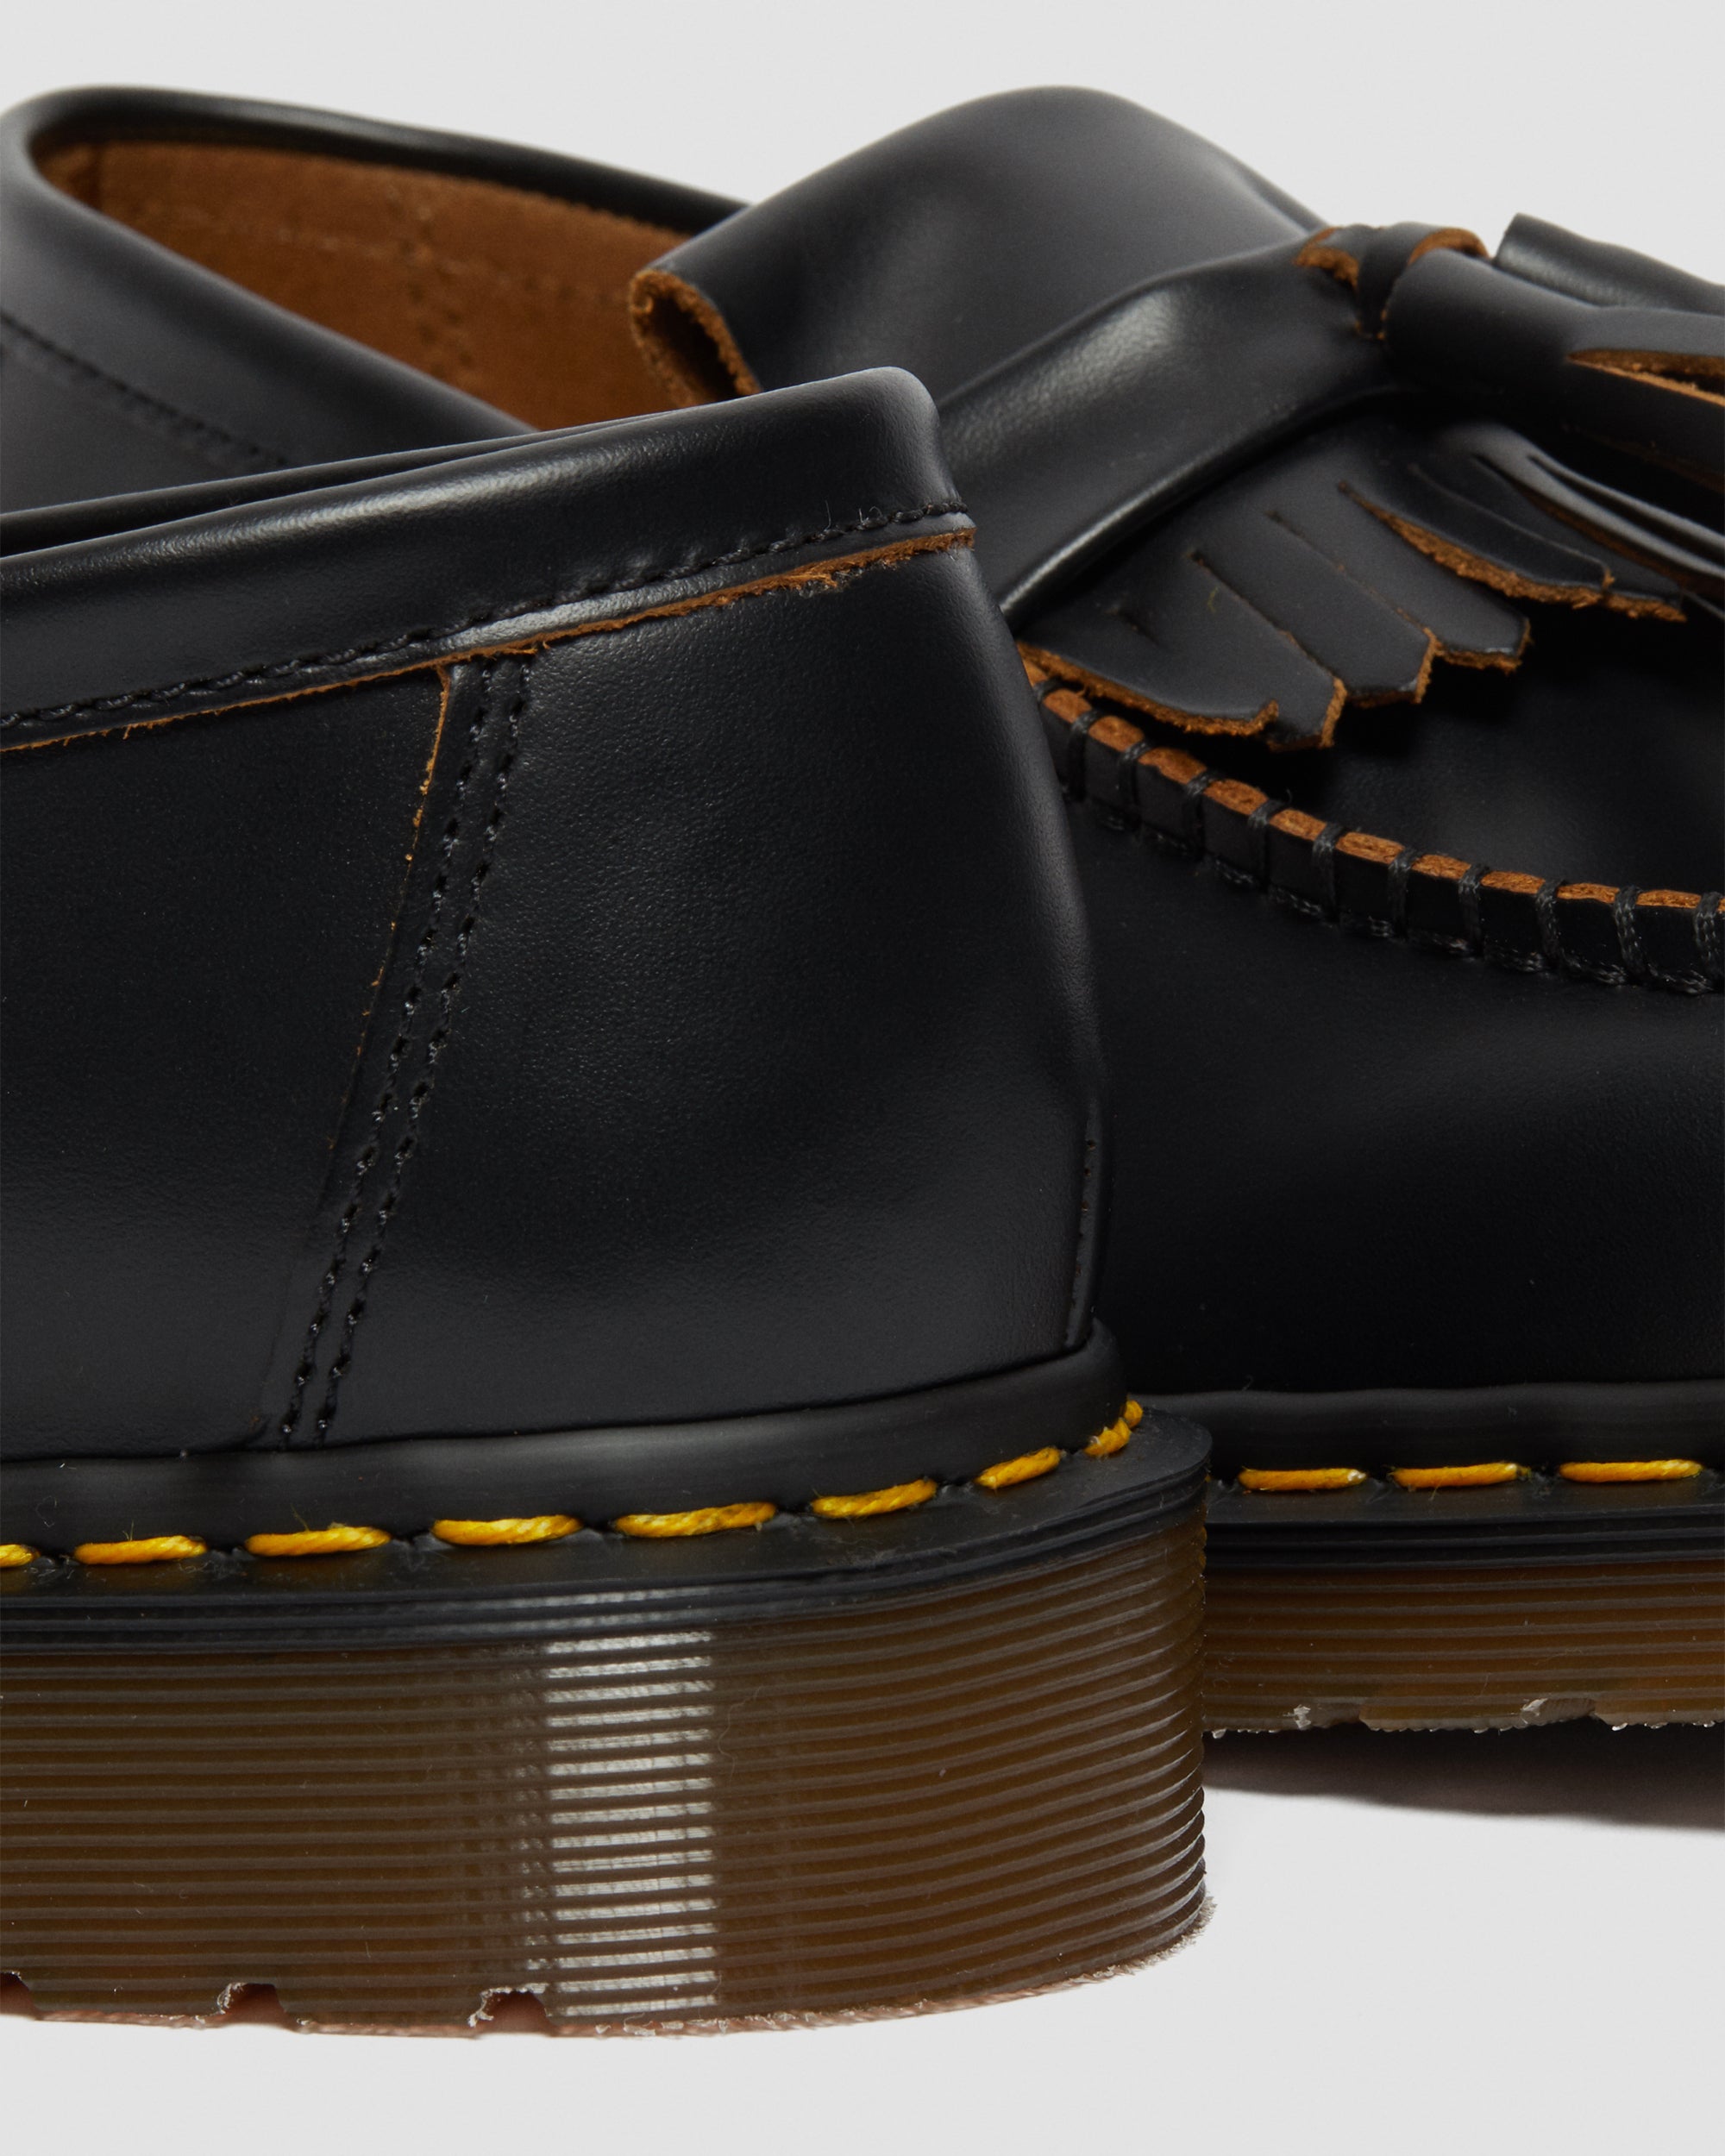 Adrian Quilon Leather Shoes